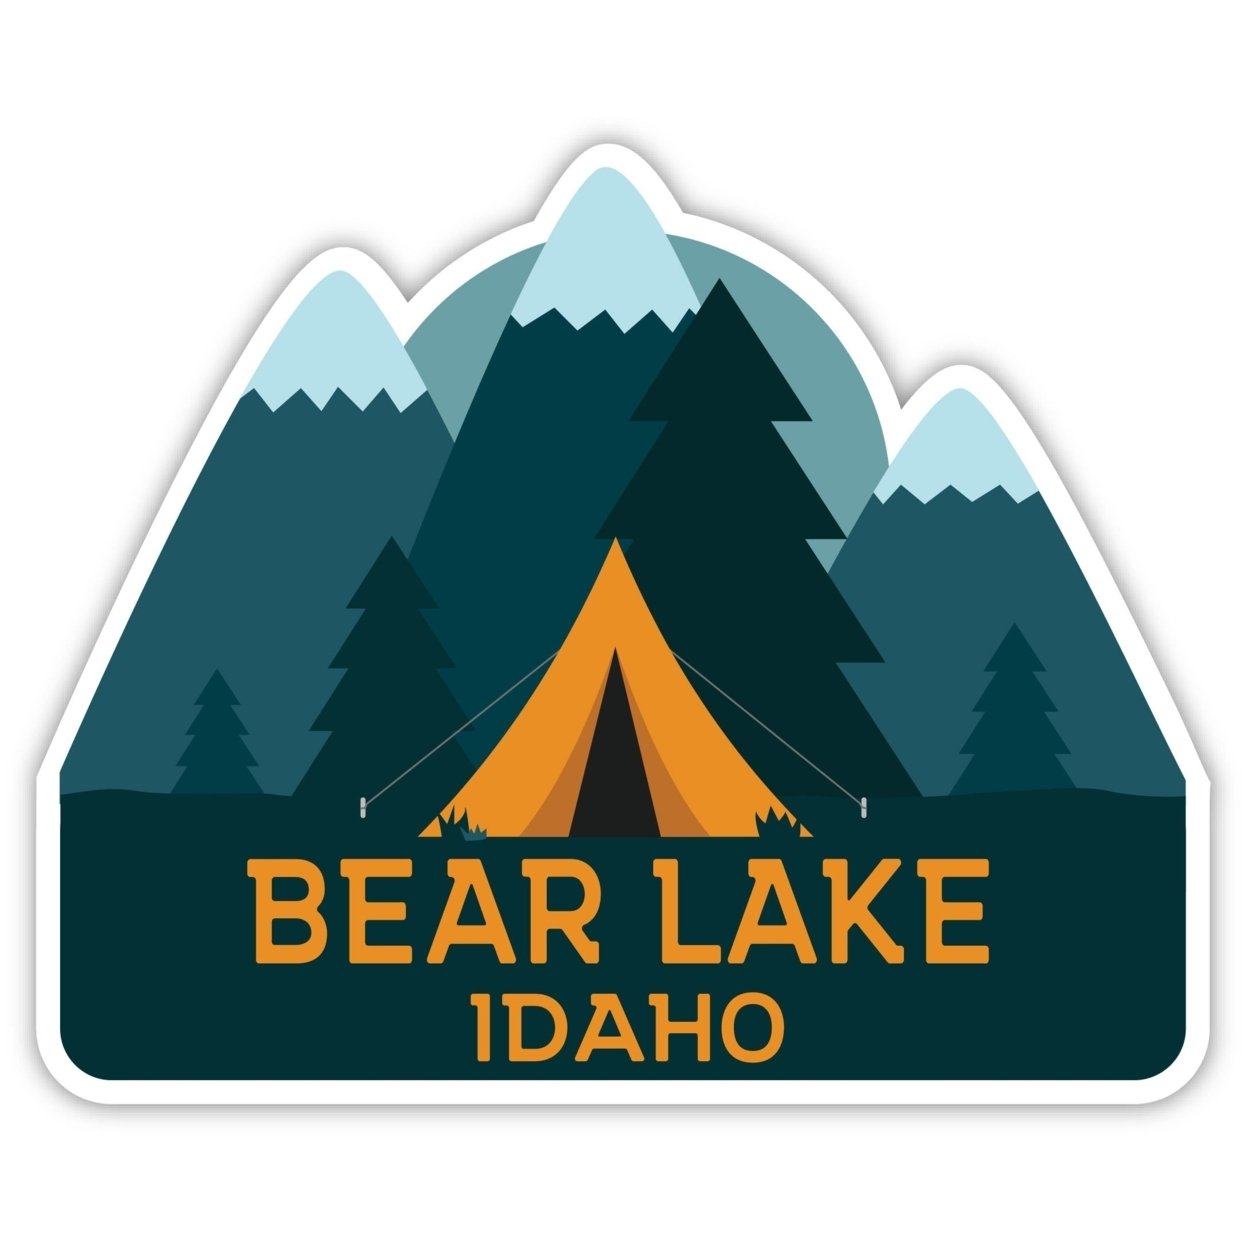 Bear Lake Idaho Souvenir Decorative Stickers (Choose Theme And Size) - 4-Pack, 2-Inch, Adventures Awaits